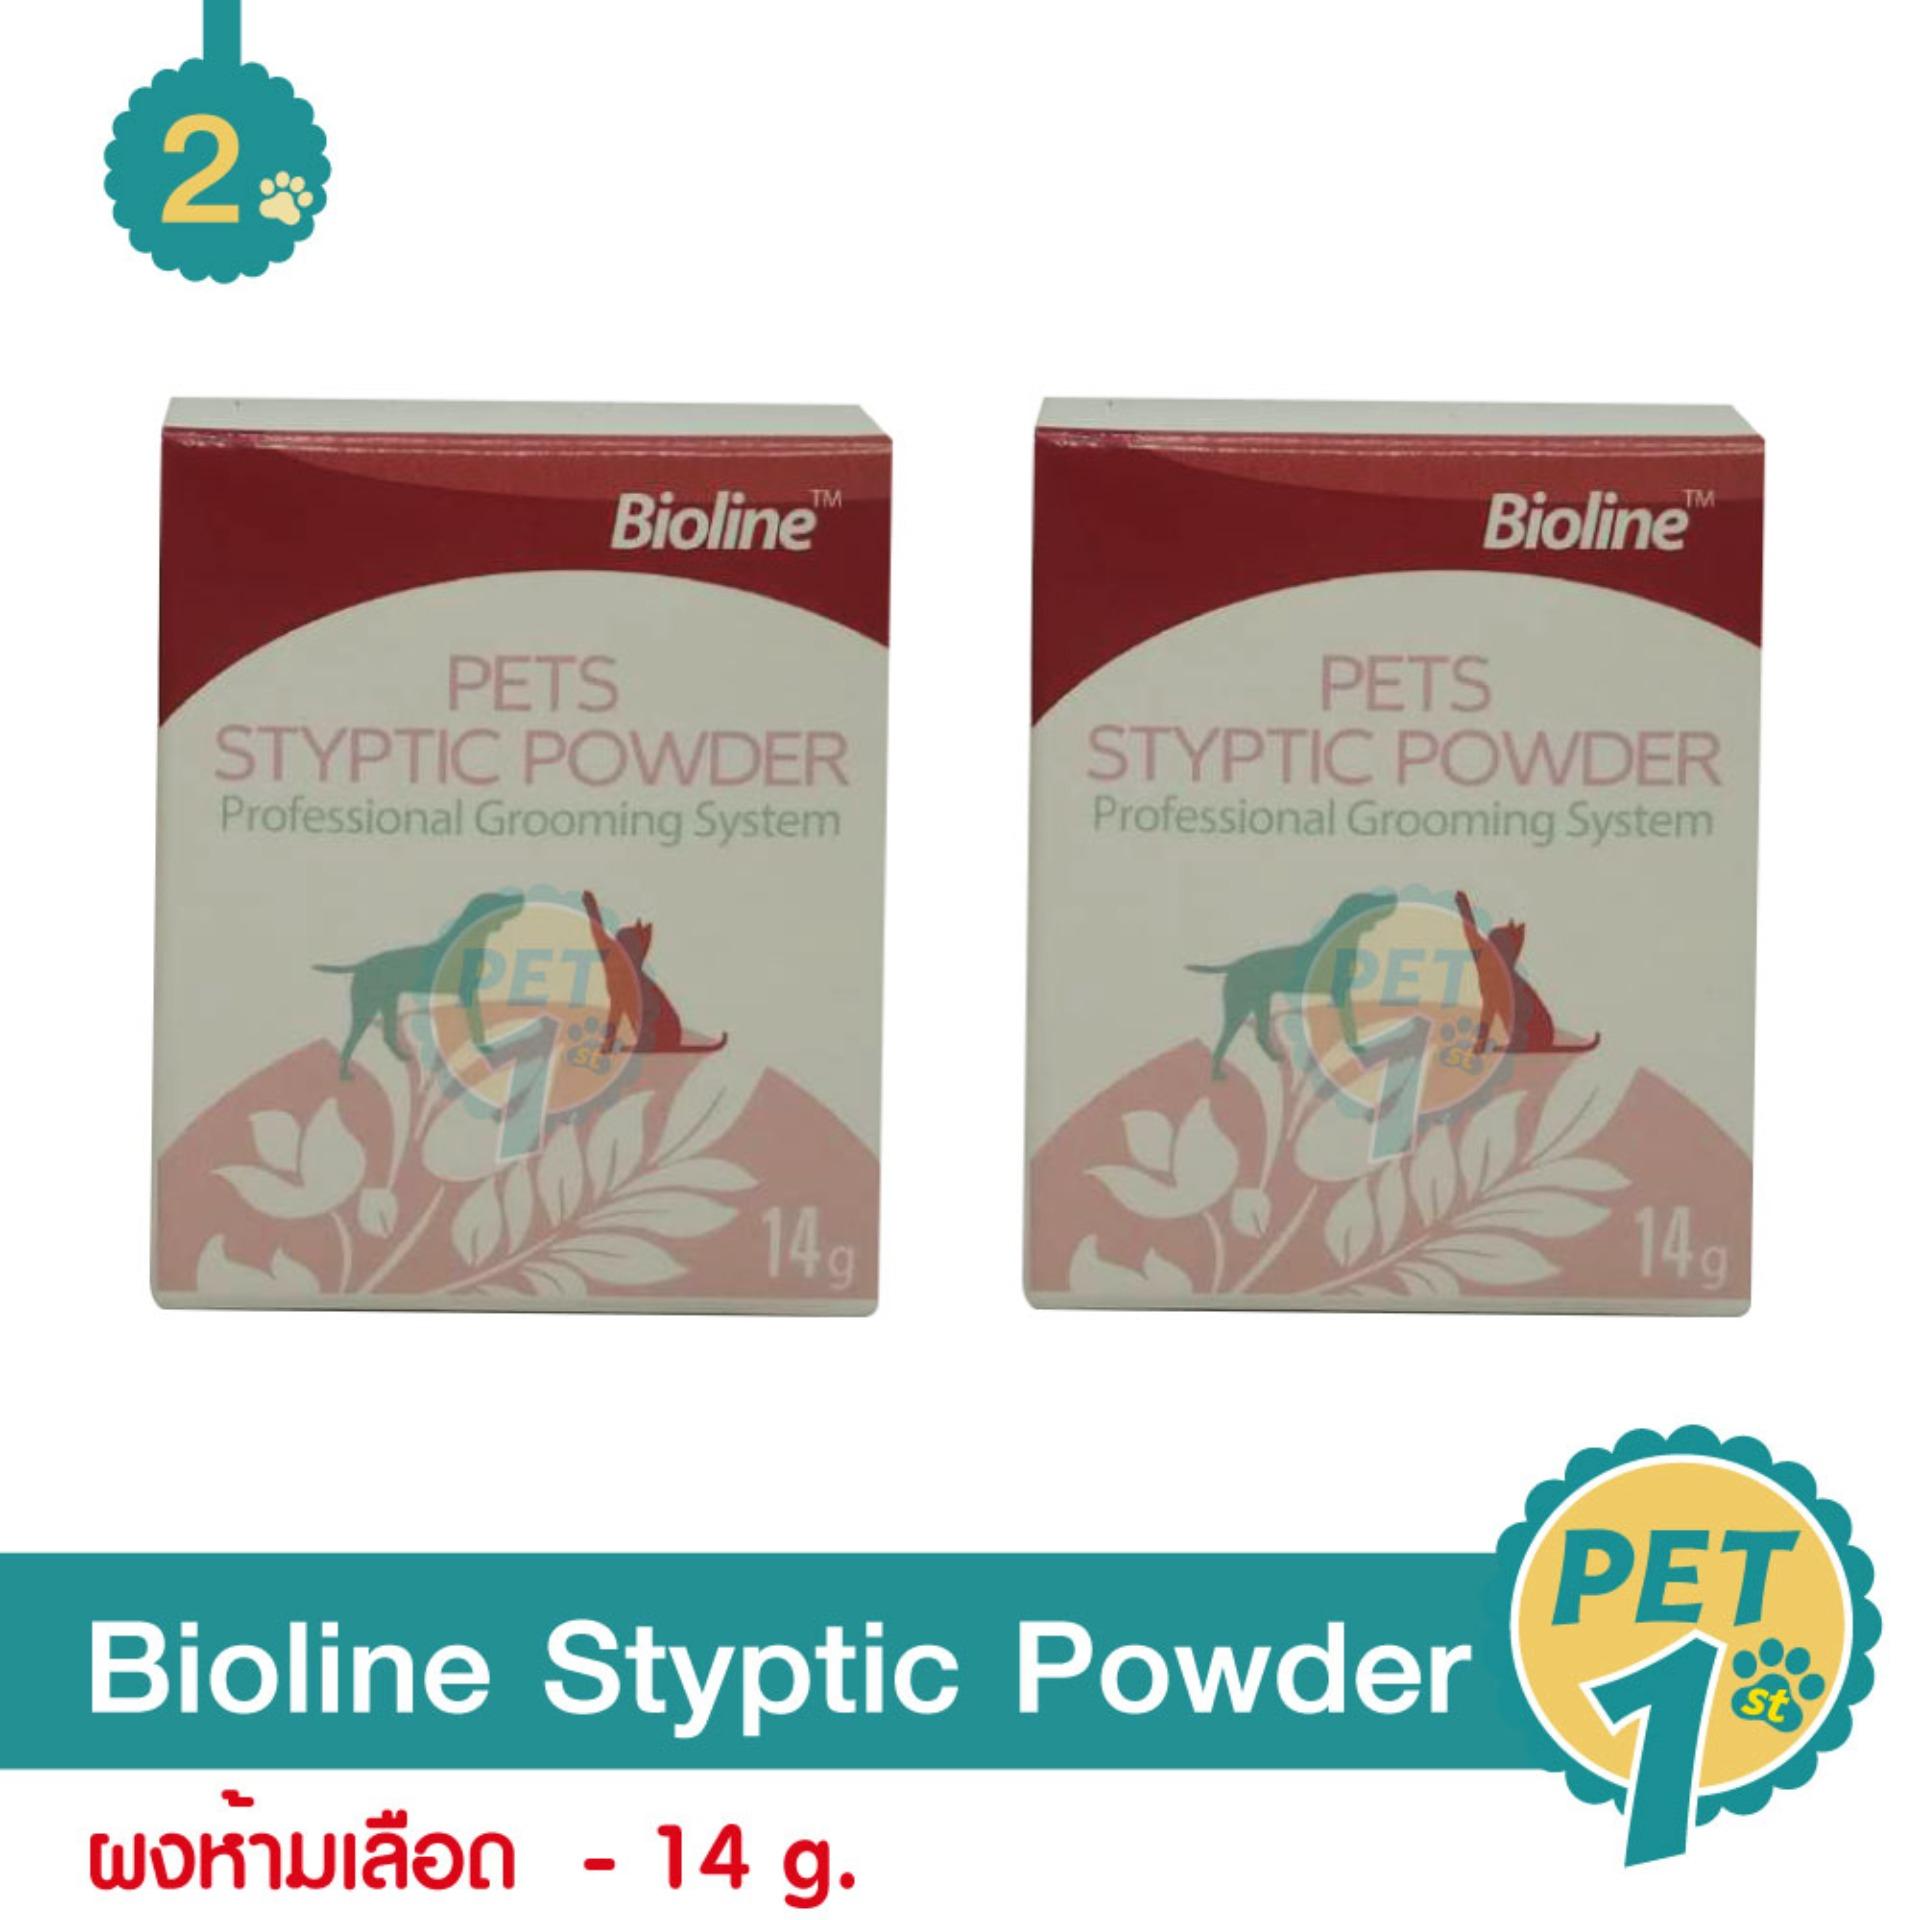 Bioline Styptic Powder ผงห้ามเลือด ใช้ปกปิดแผลจากการตัดแต่งเล็บ ดูดซับน้ำได้ดี แห้งไว 14 g. - 2 แพ็ค